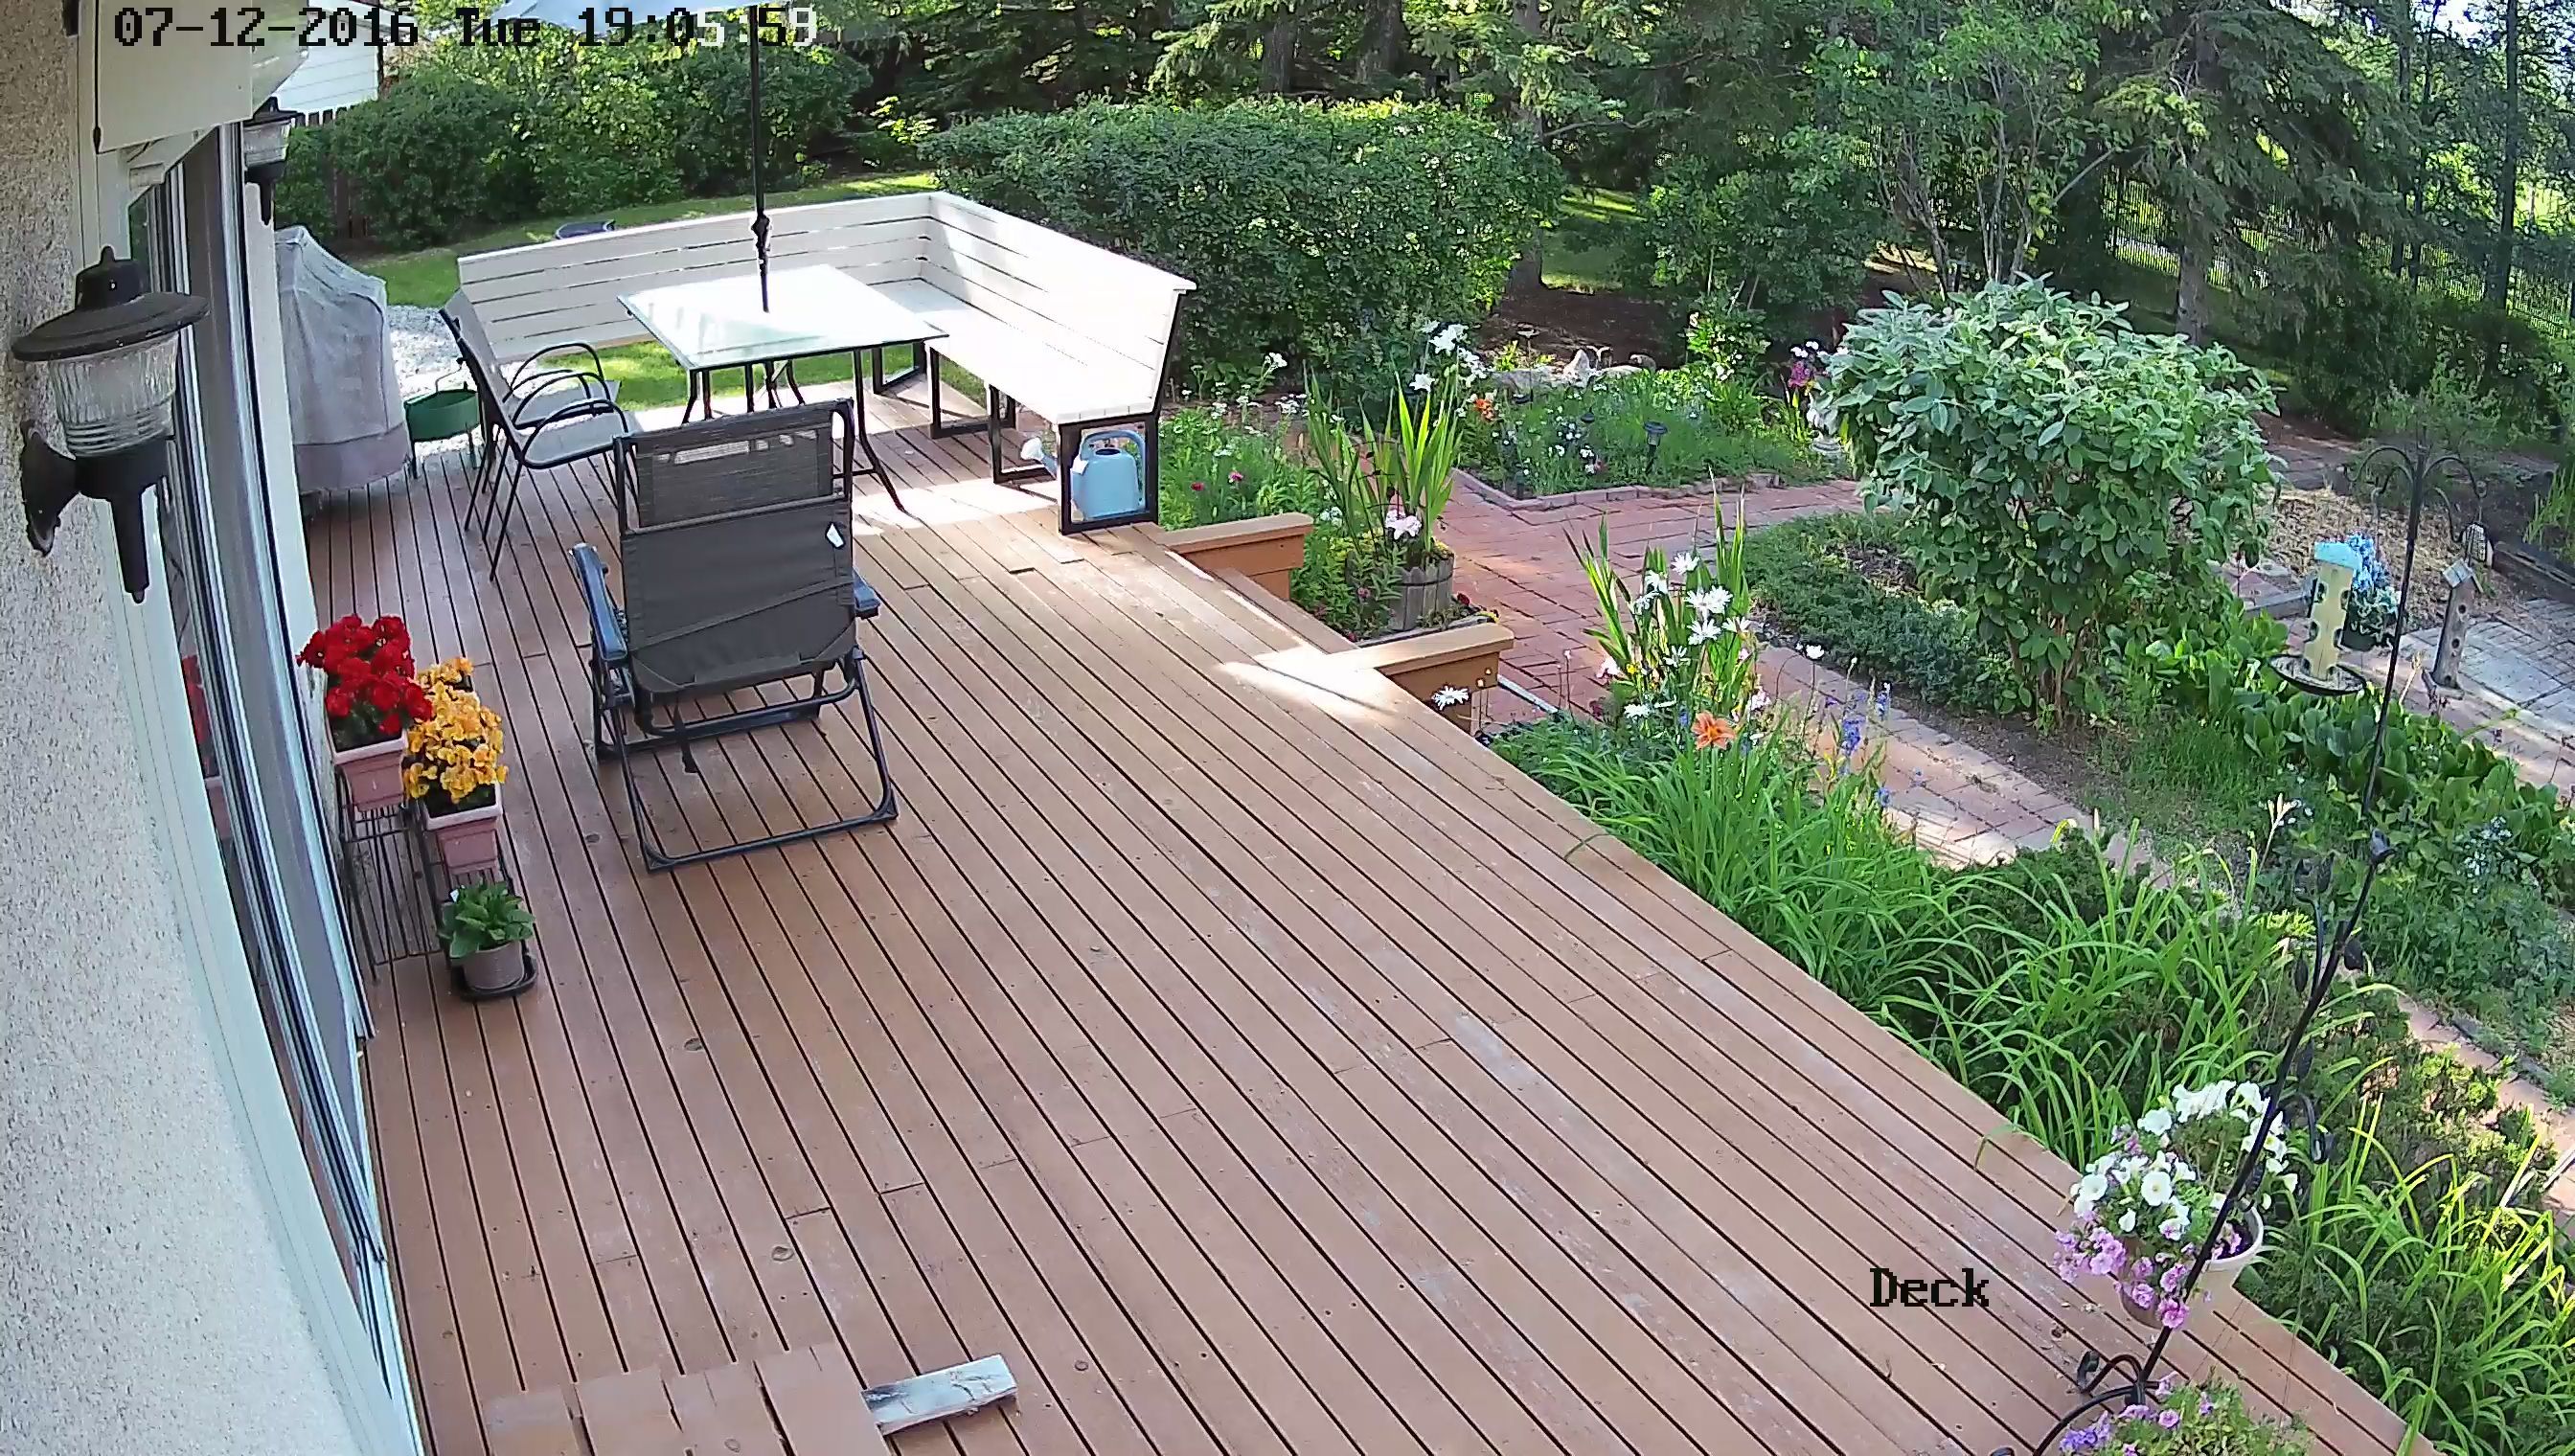 backyard.deck.summer - Action Security Cameras